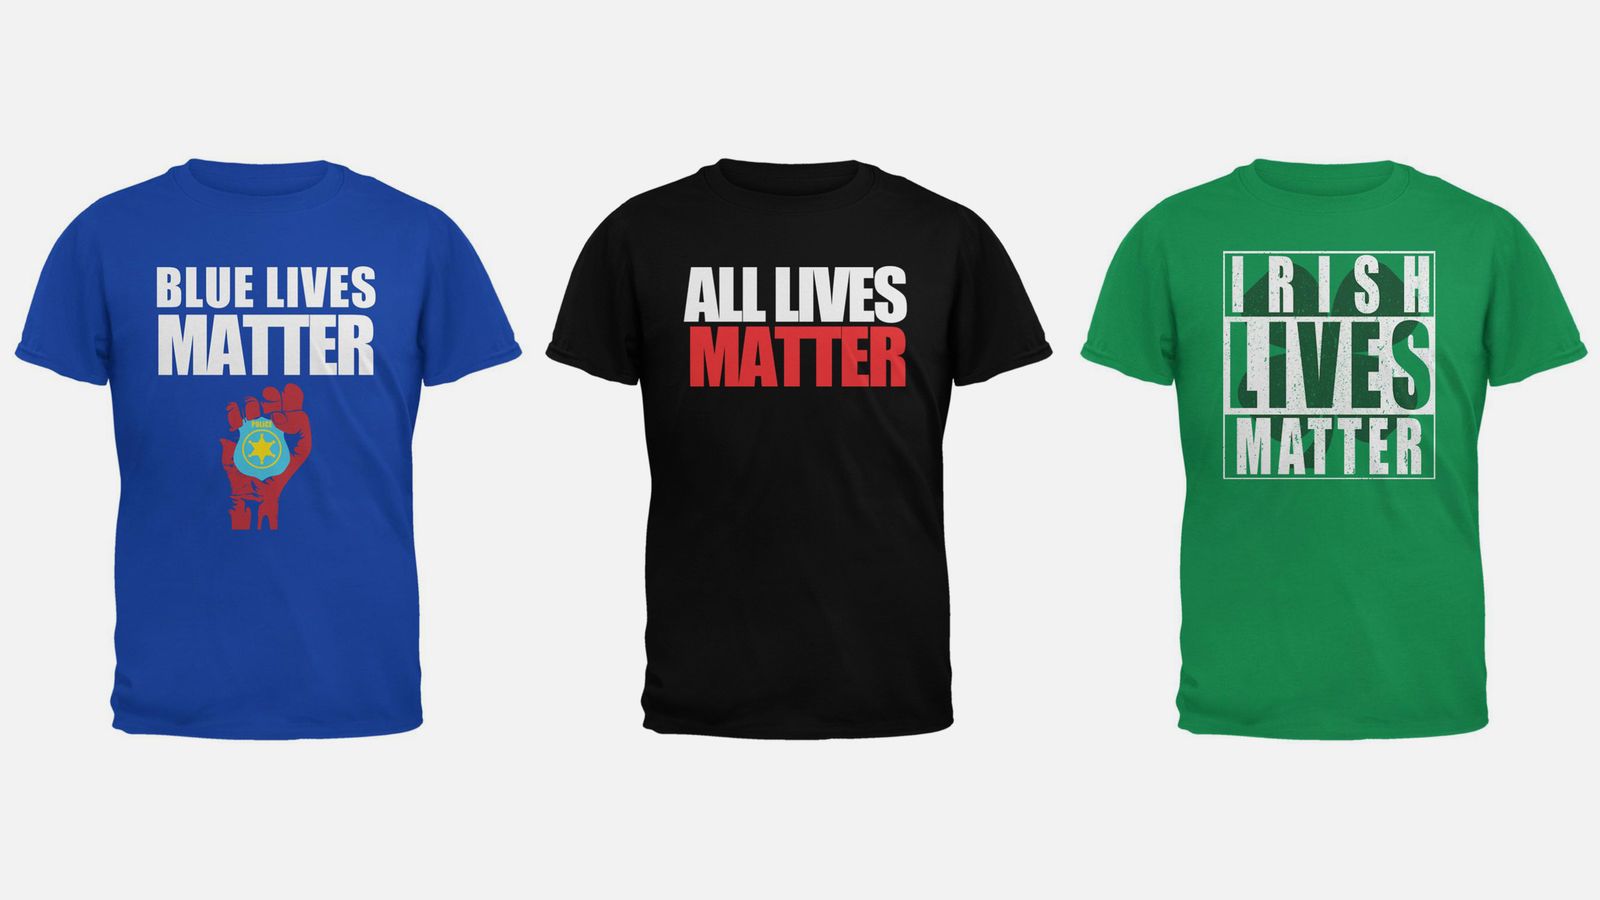 Walmart gets backlash over T-shirts with 'All Lives Matter' and 'Irish  Lives Matter' slogans